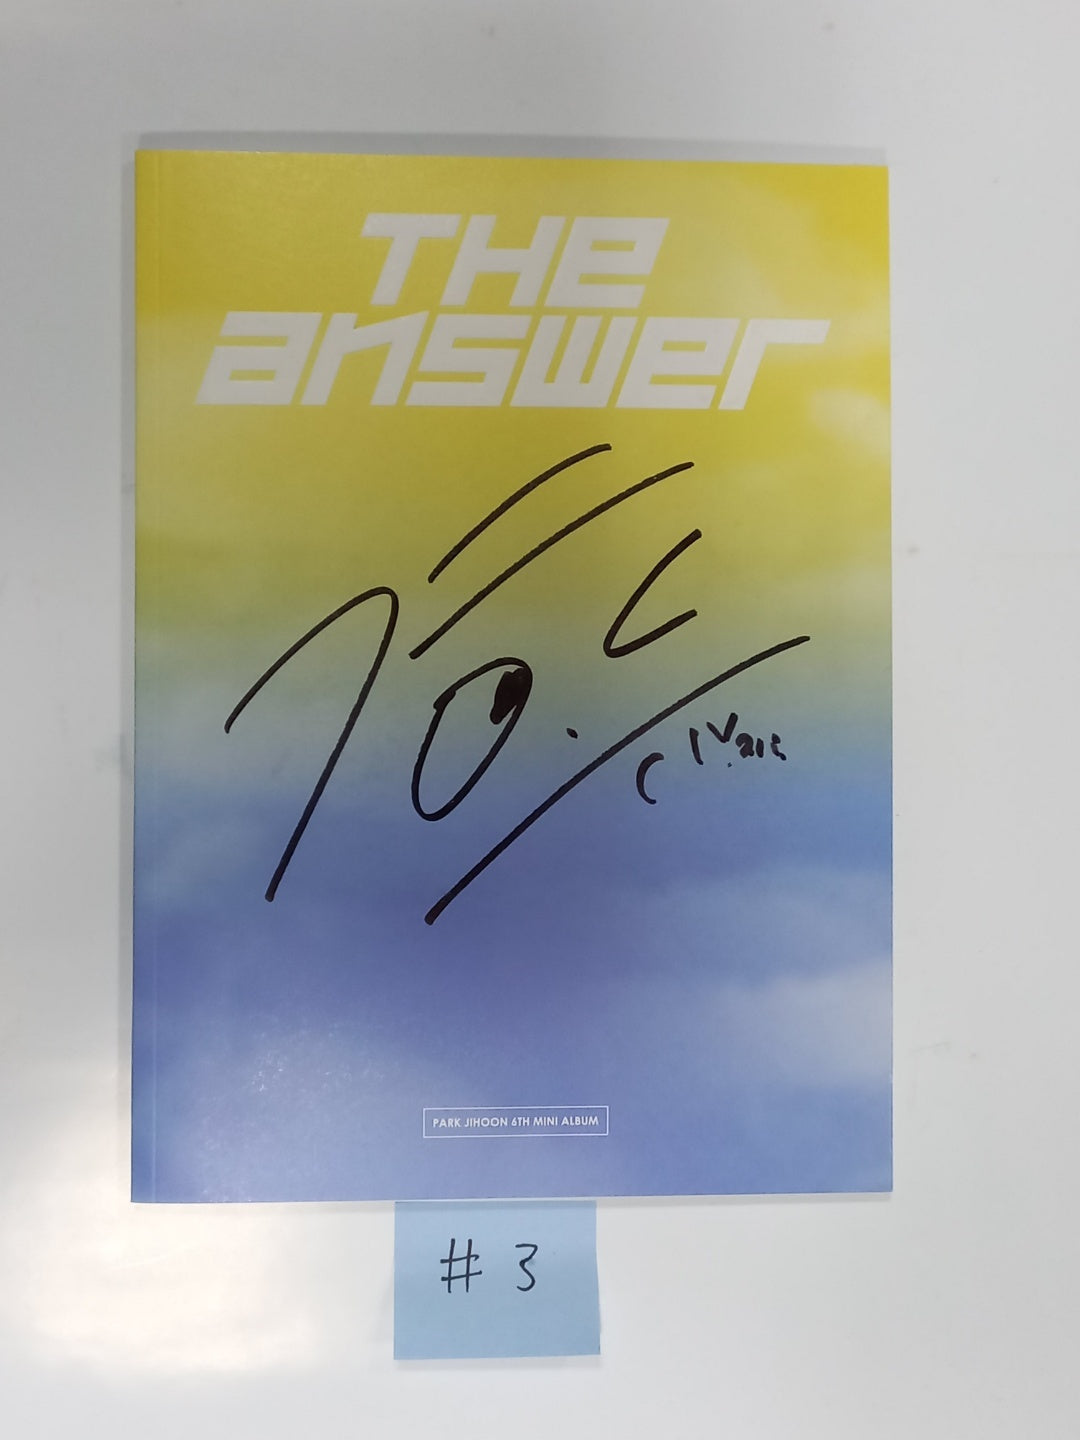 Park Ji Hoon "THE ANSWER" - Hand Autographed(Signed) Promo Album